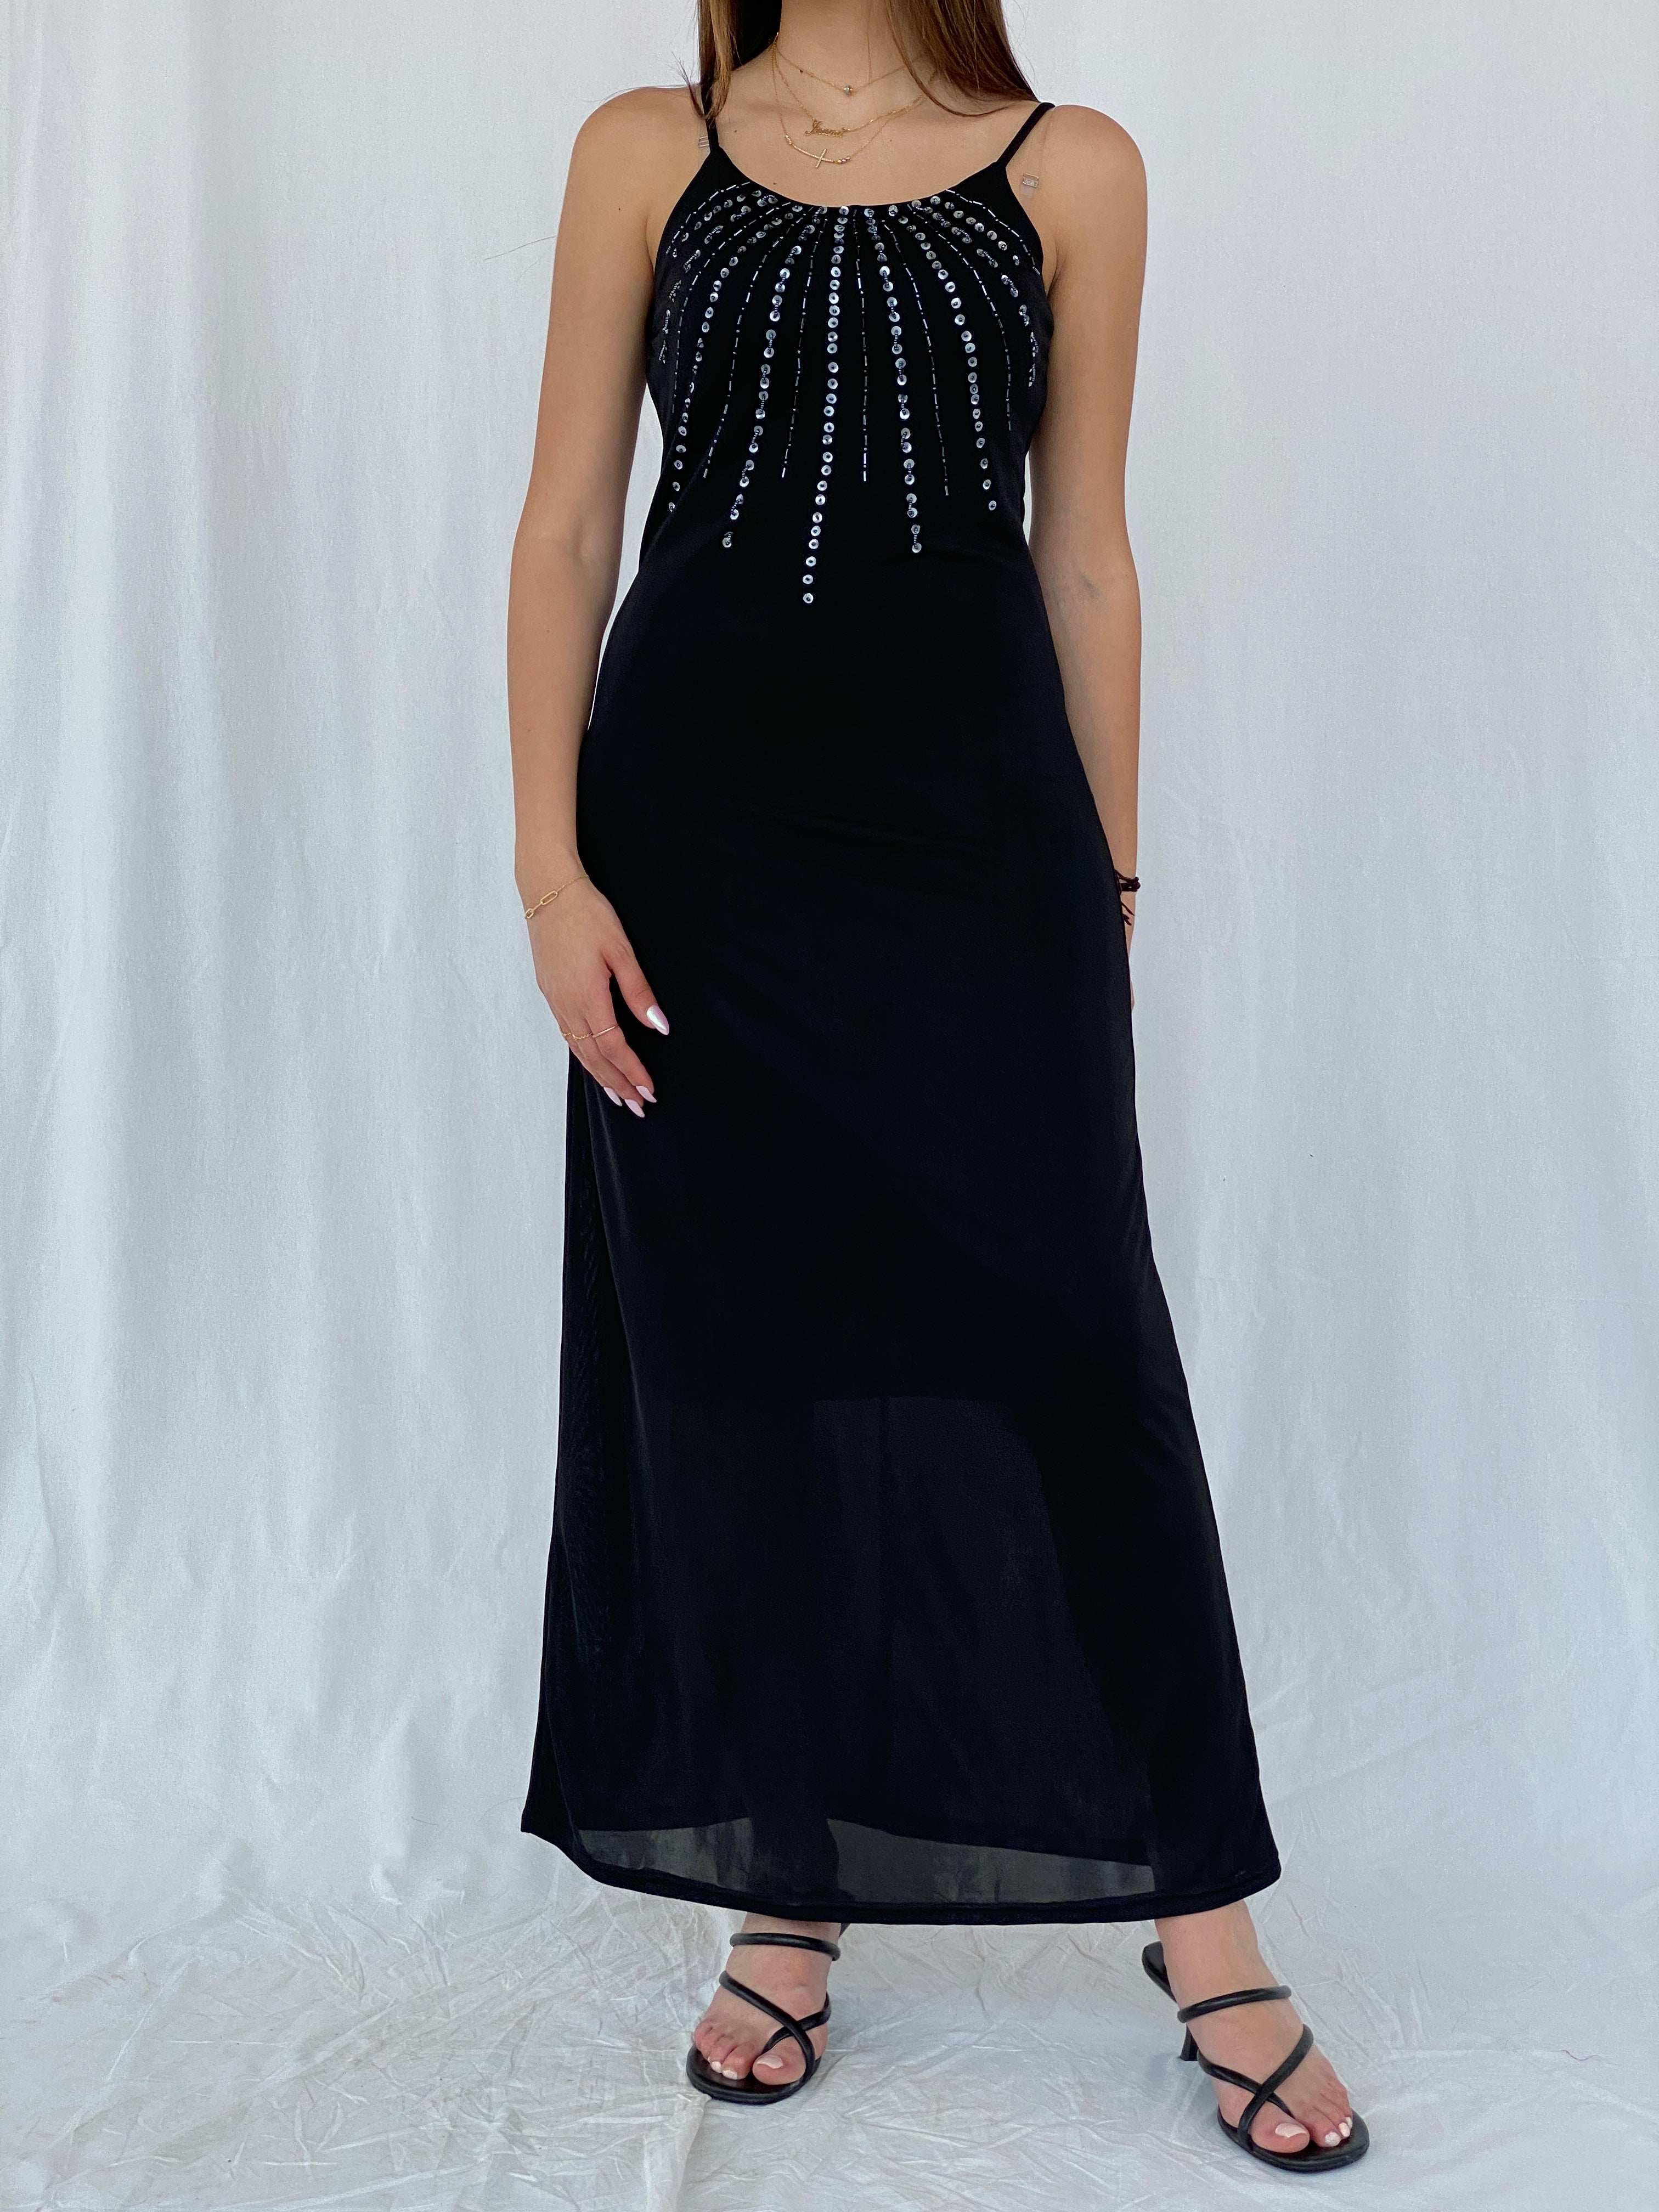 Vintage Yihao Black Maxi Dress With Sequin Details - Size M - Balagan Vintage Maxi Dress 90s, black dress, dress, formal dress, Juana, maxi dress, NEW IN, Wedding Guest